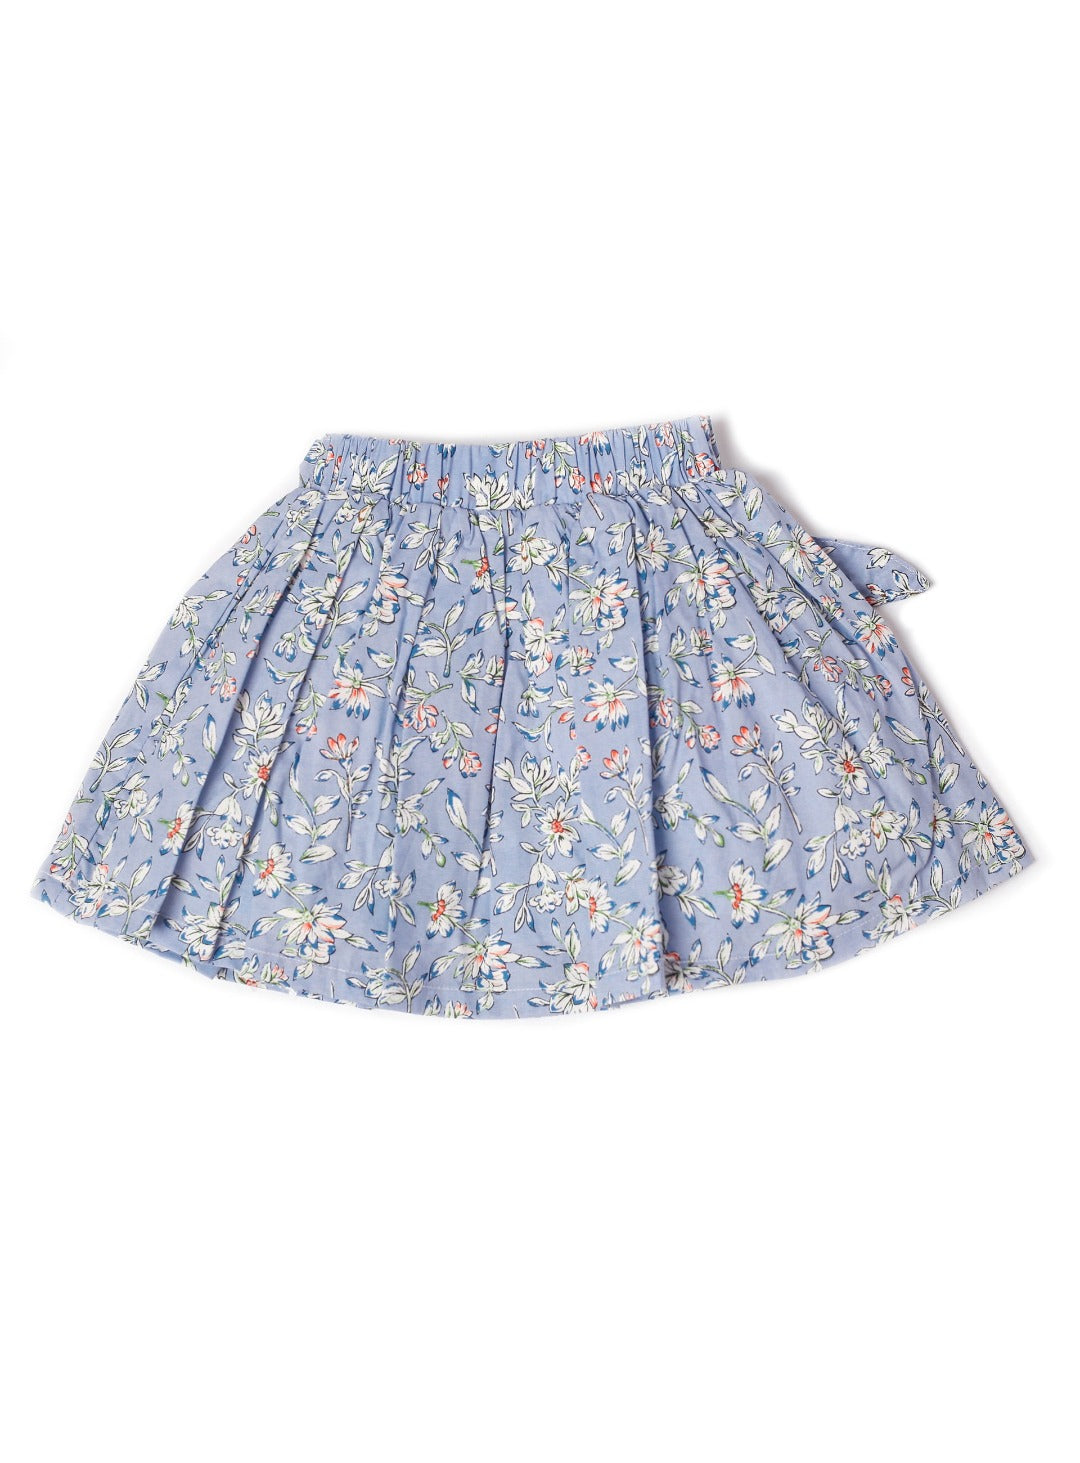 teapot blue skirt with idyllic flowers pattern